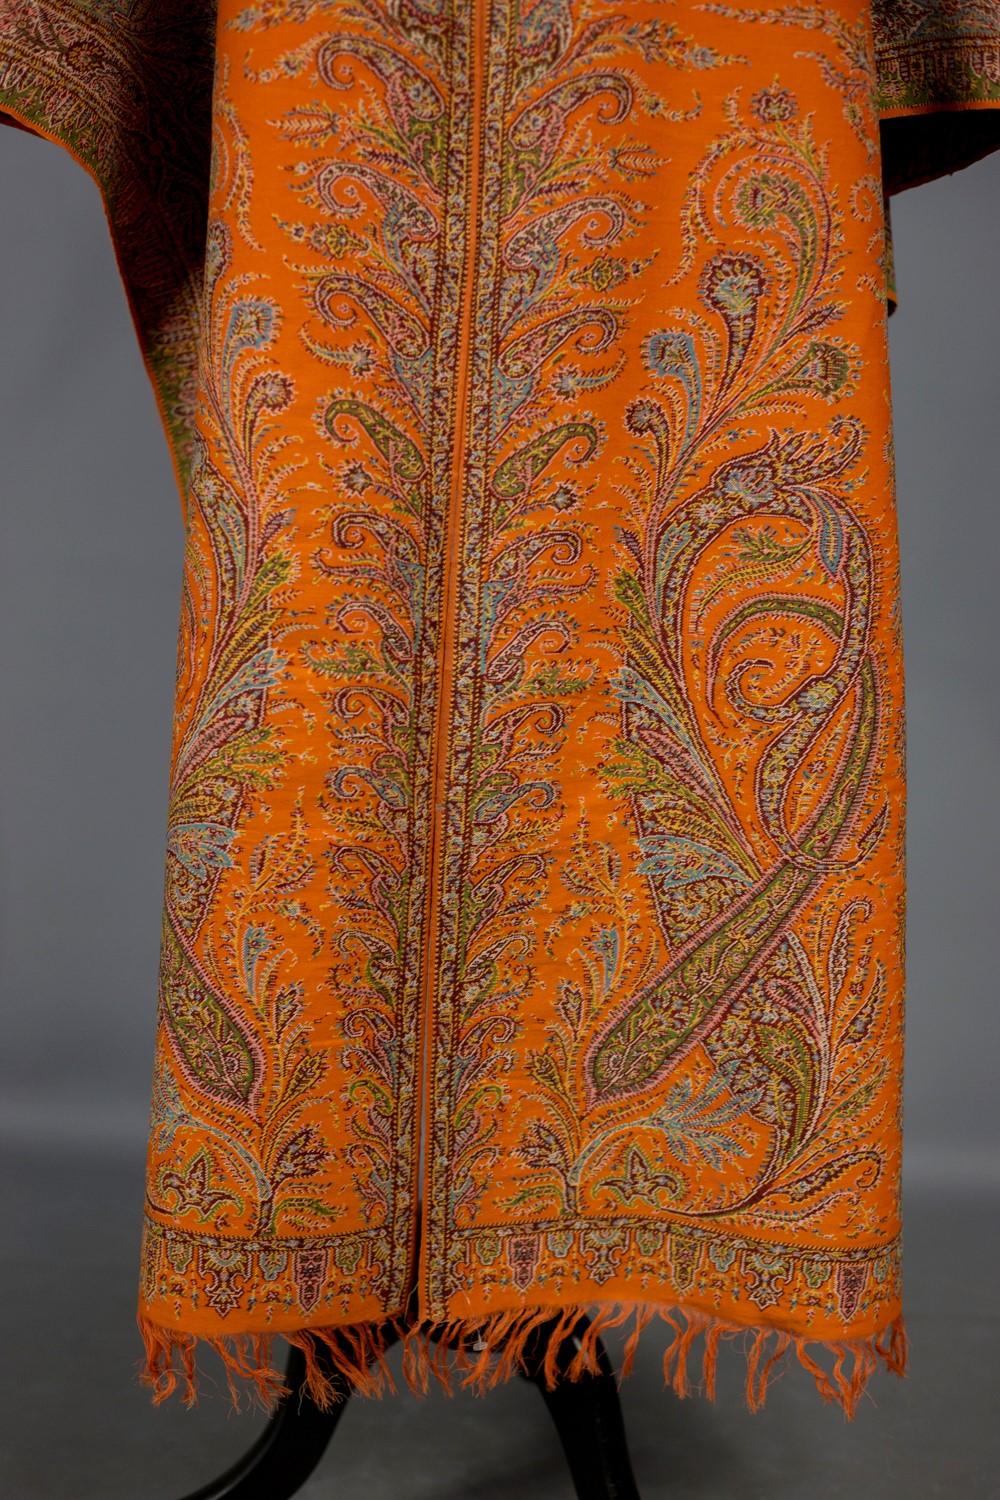 Orange Cashmere Woollen Paisley Stole Shawl - France Circa 1850 For Sale 2